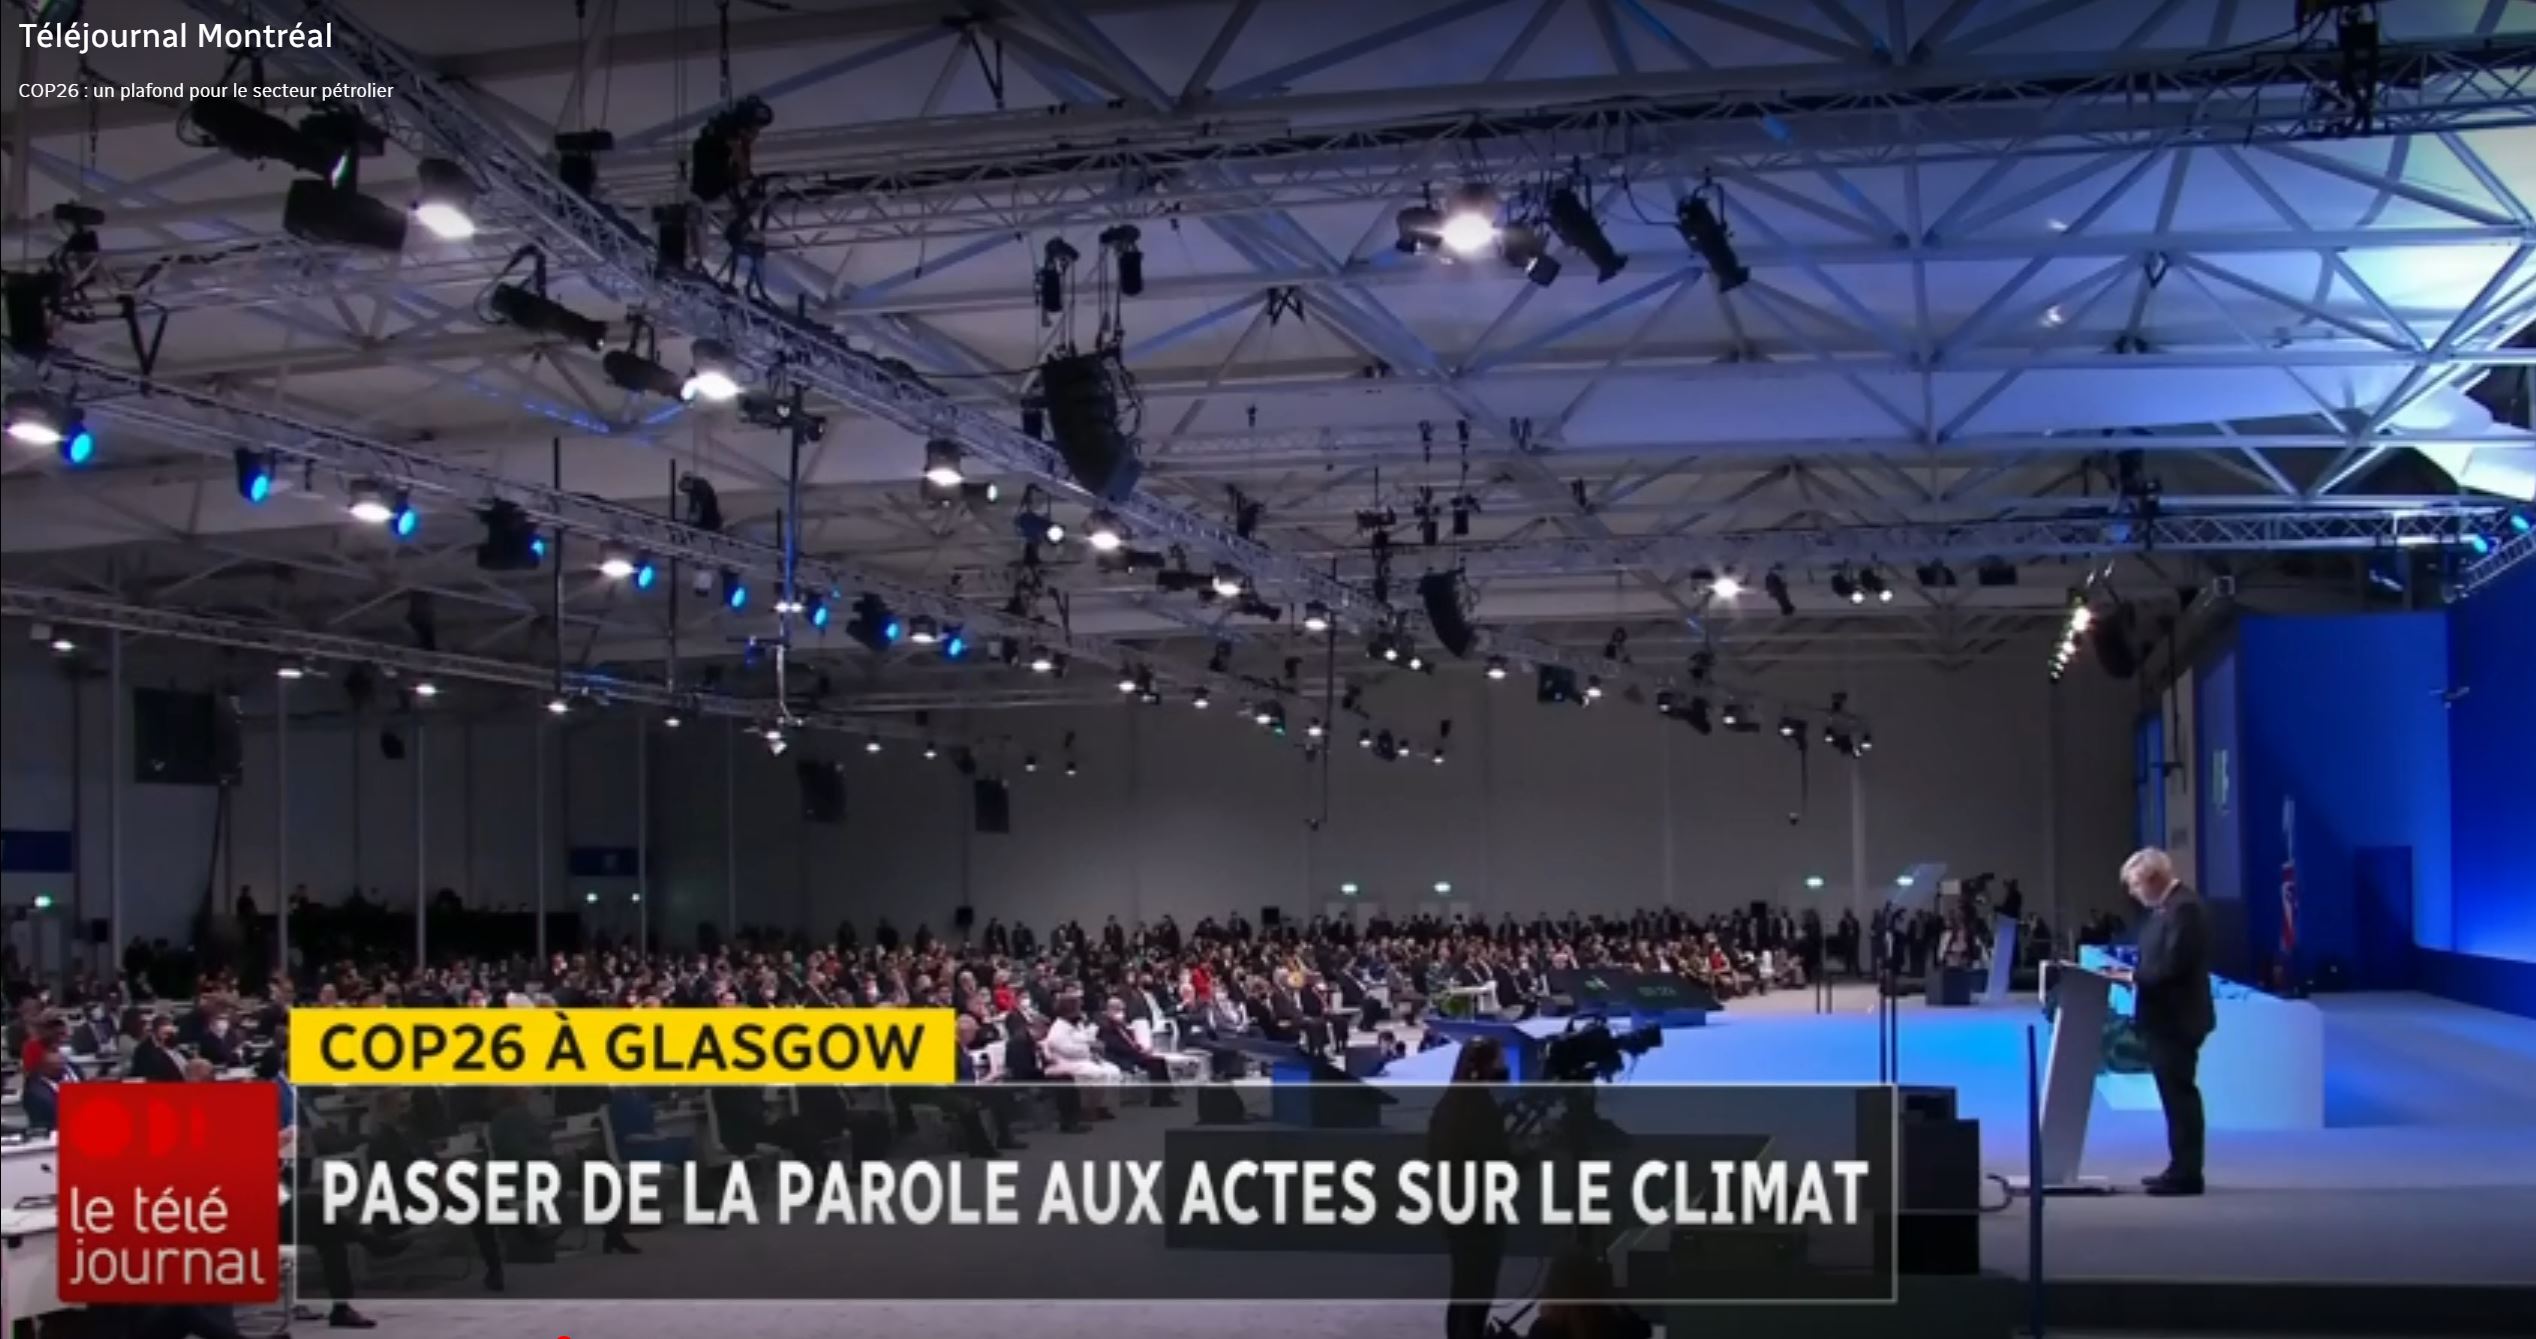 le-cirque-climato-alarmiste-mondialiste-de-la-cop26-a-glasgow-en-ecosse.JPG